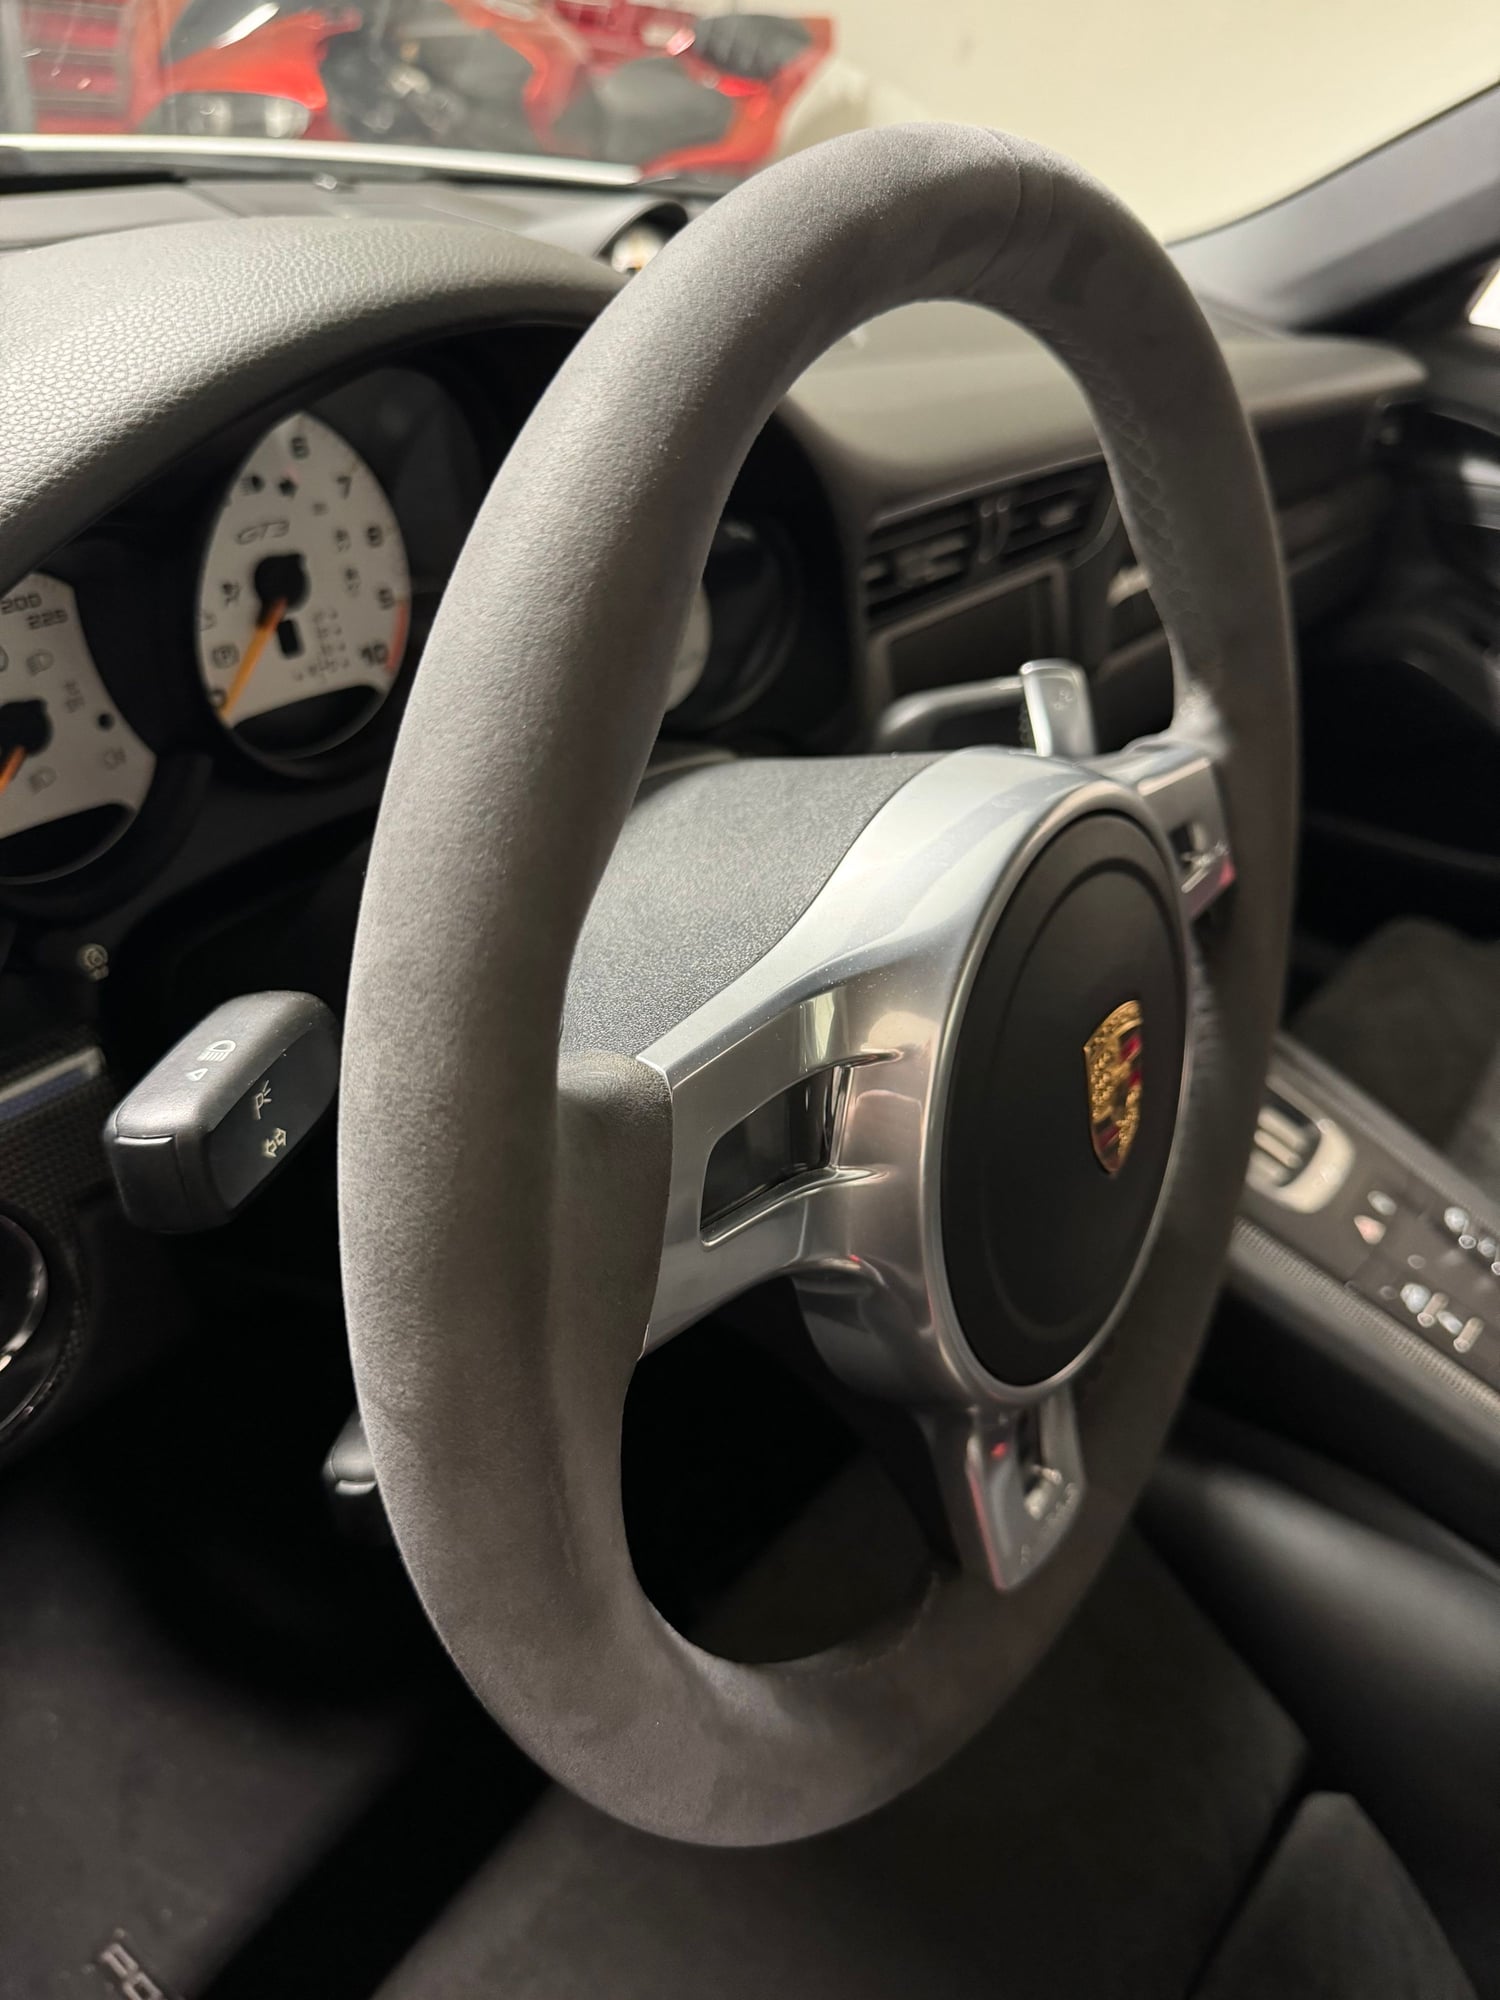 Interior/Upholstery - 991 GT3 Alcantara Steering Wheel & Airbag - Used - Tustin, CA 92705, United States